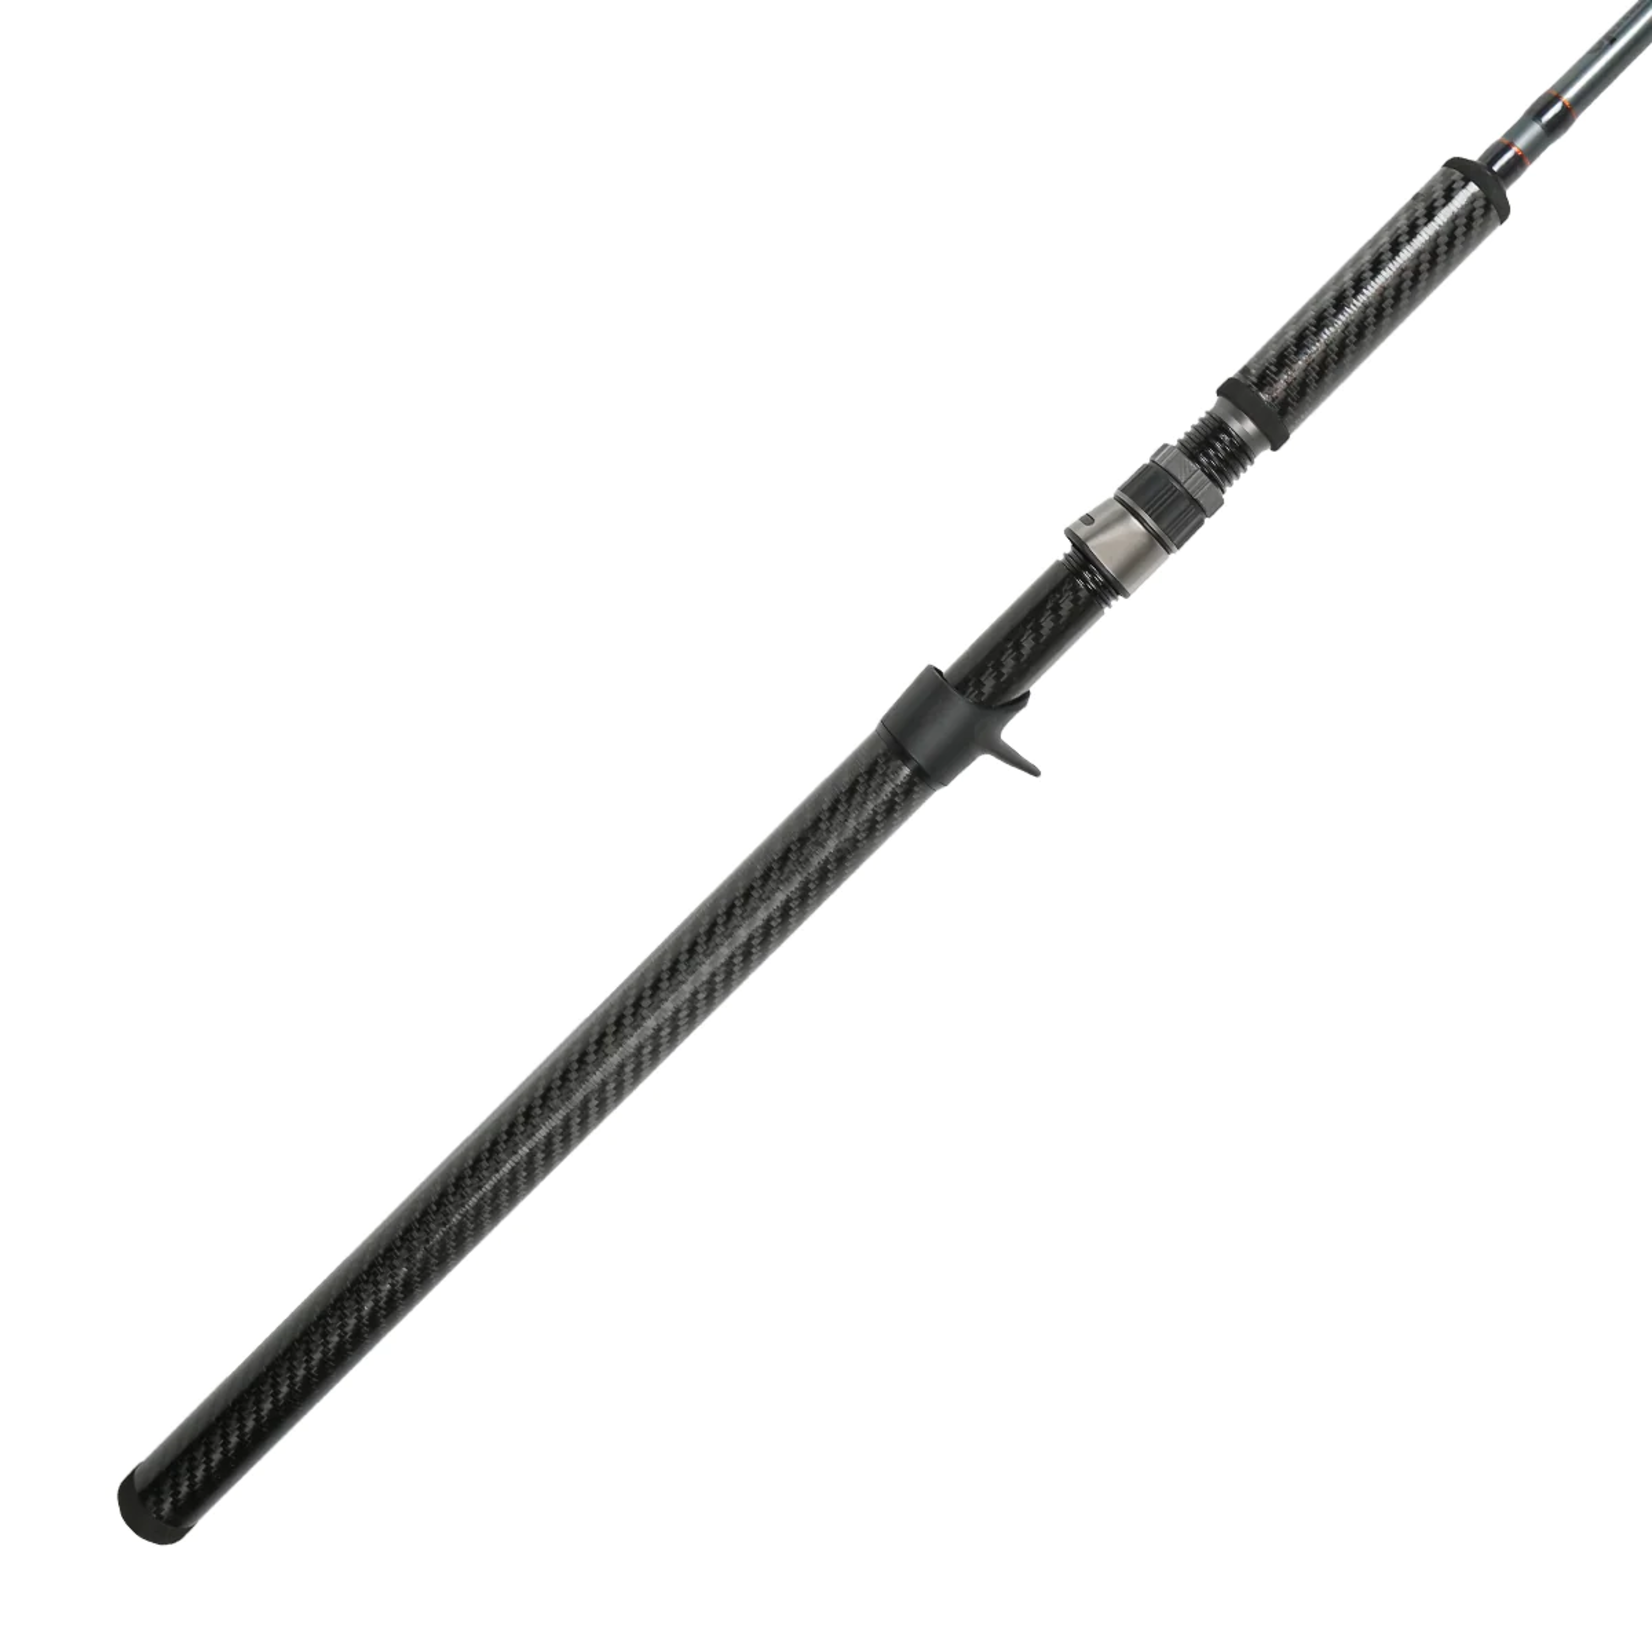 Okuma SST New generation rod with carbon grips